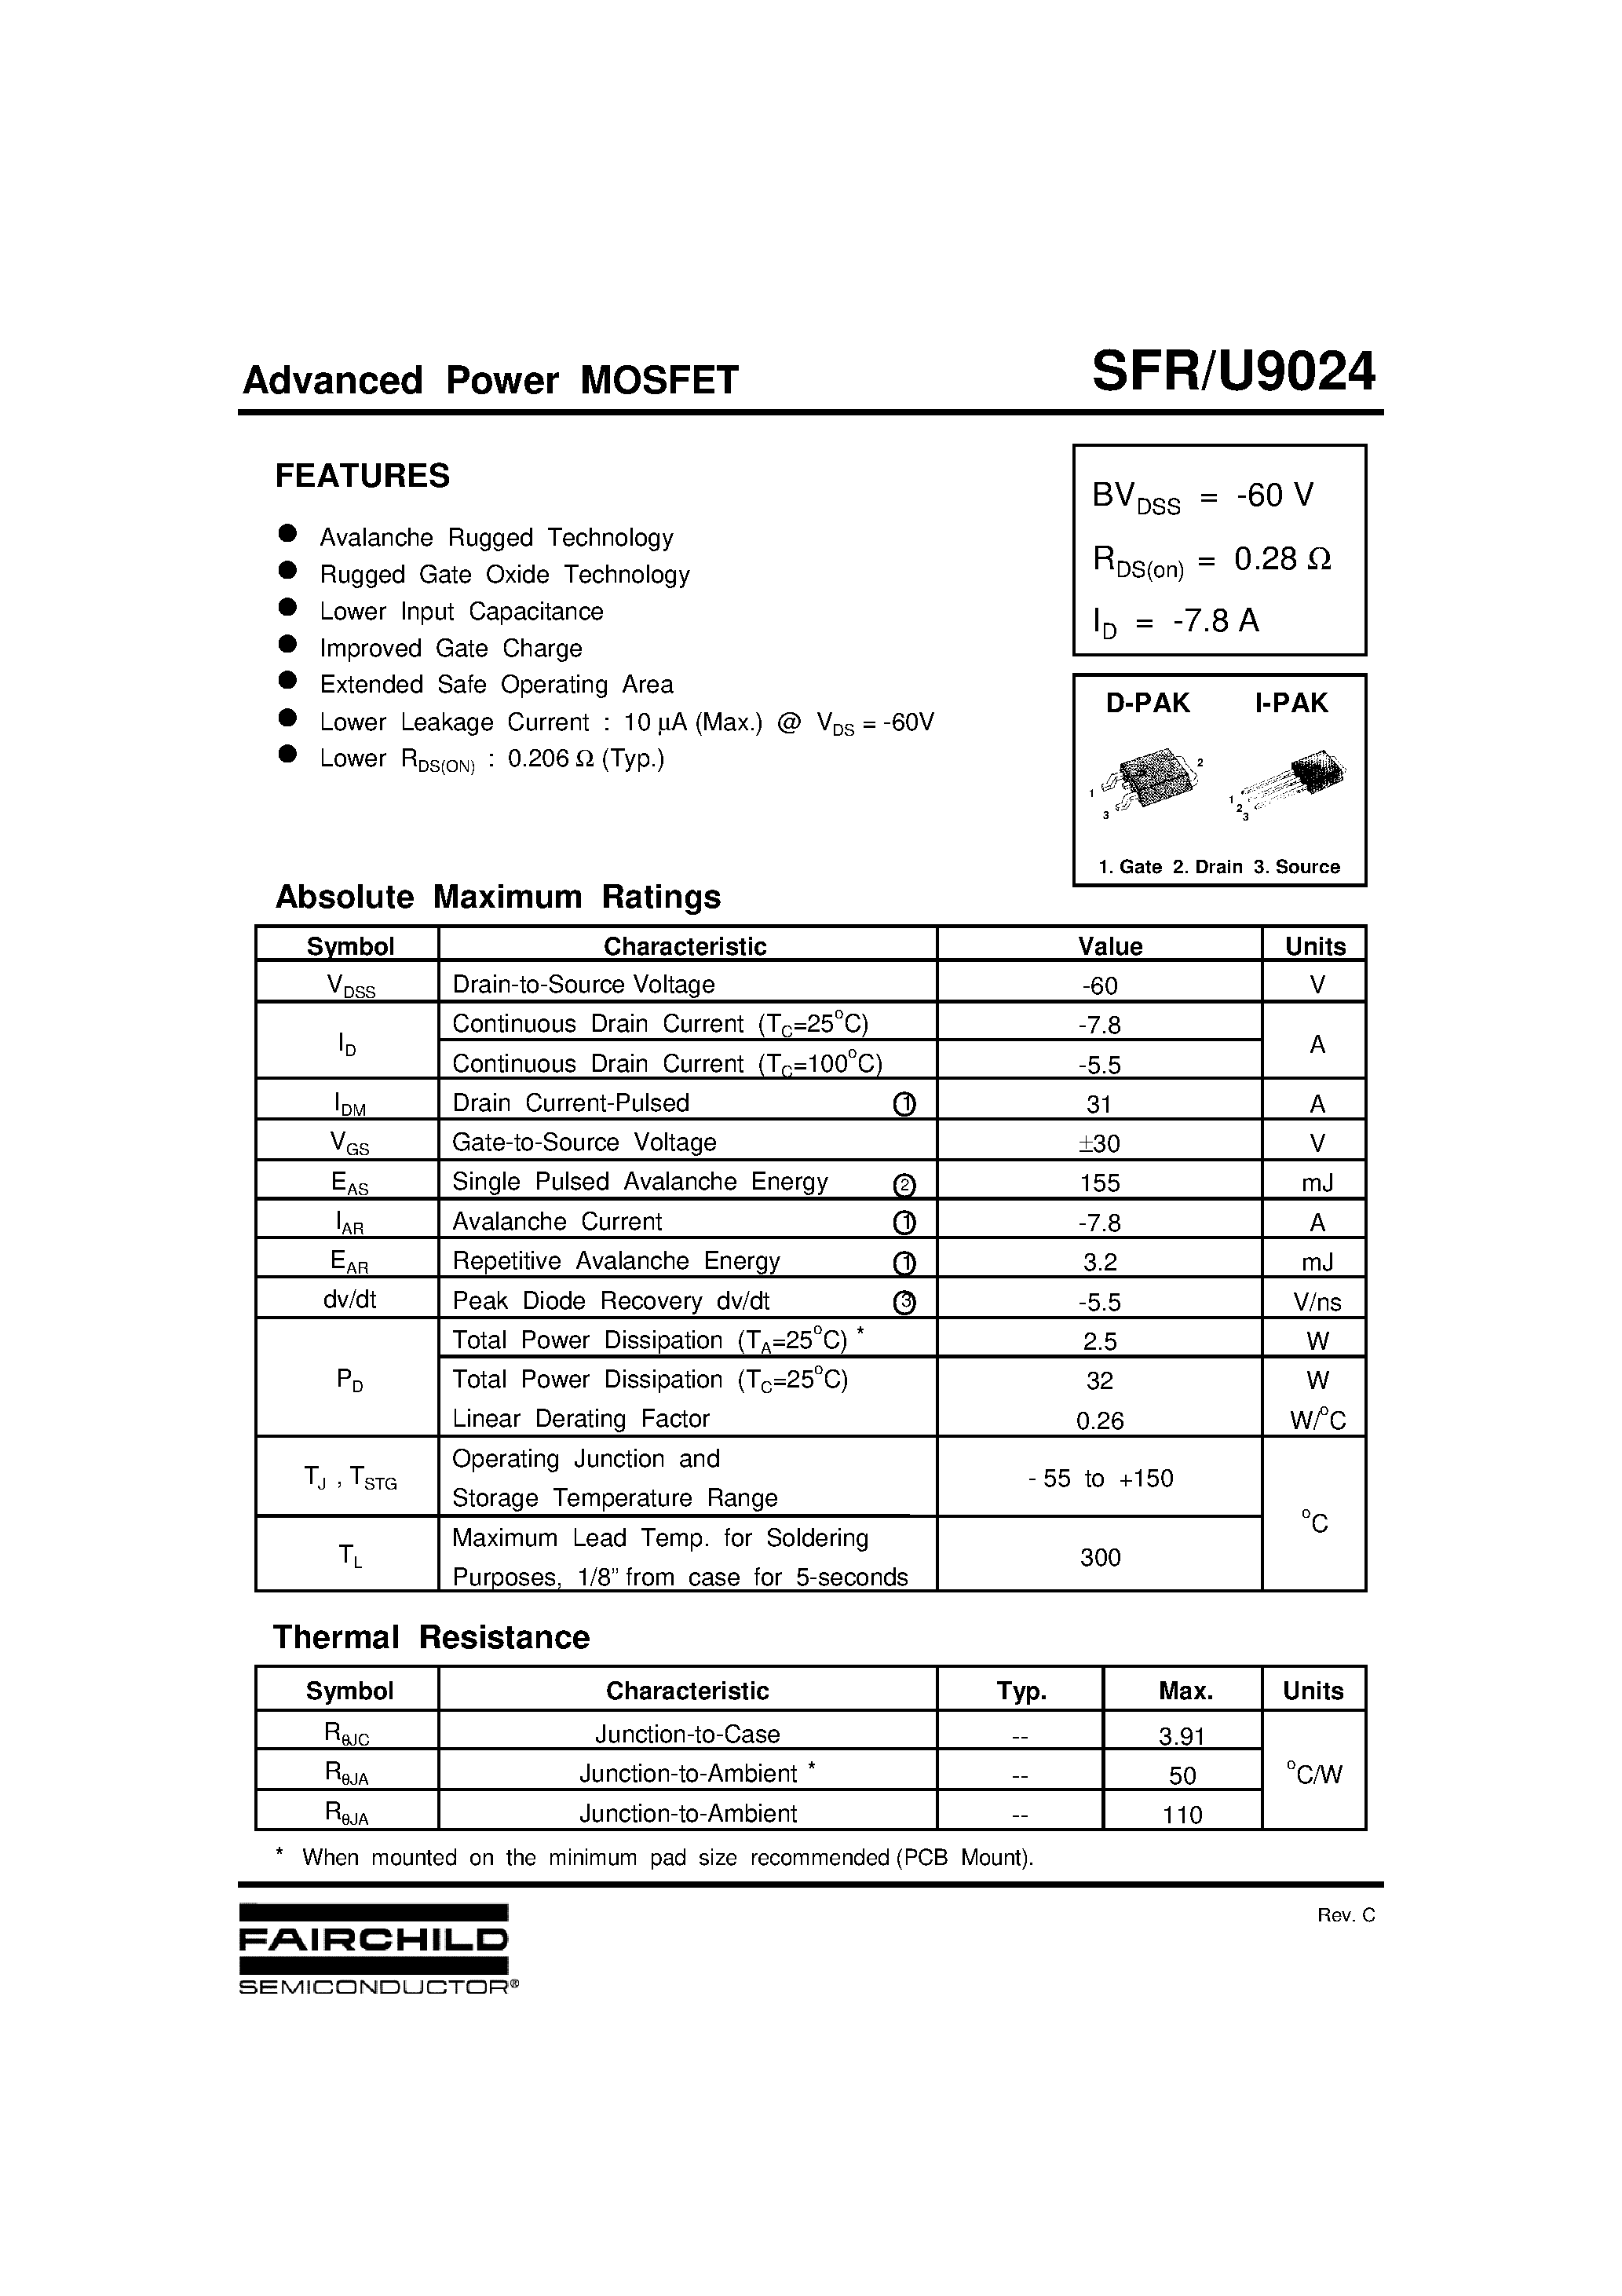 Datasheet SFR9024 - Advanced Power MOSFET page 1